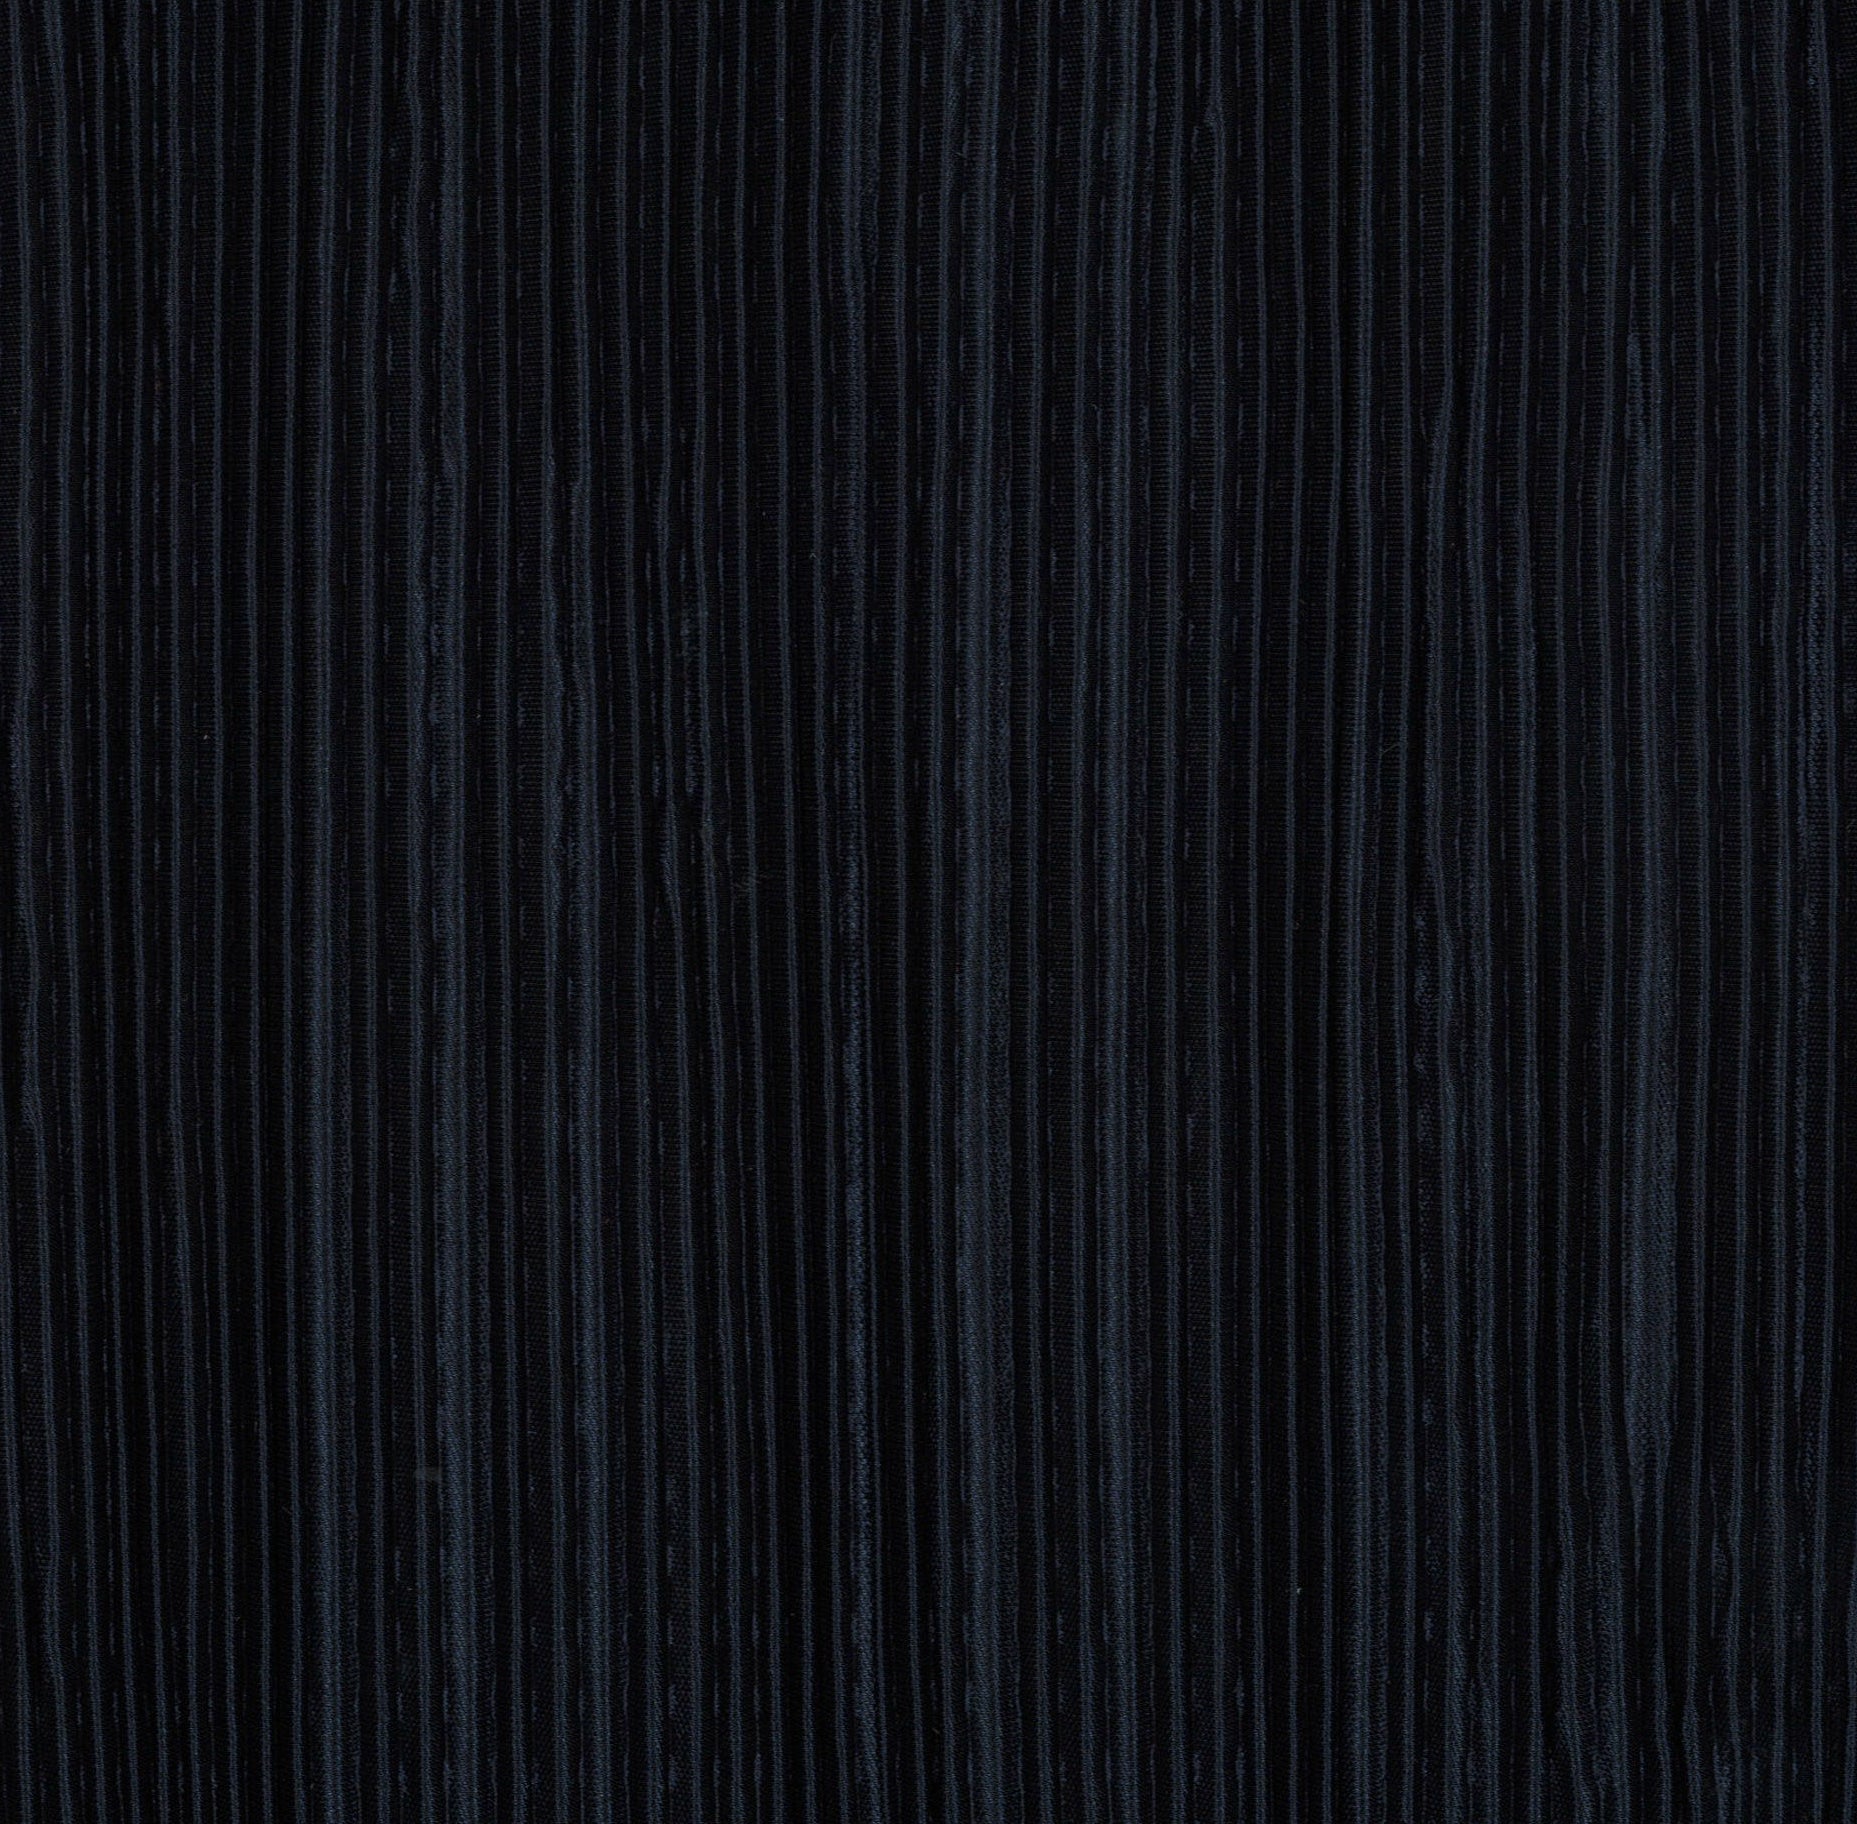 9761-08 Dark Navy Polyester Pleat Plain Dyed 100% 180g/yd 56&quot; blue knit plain dyed pleat polyester Solid Color, Pleat - knit fabric - woven fabric - fabric company - fabric wholesale - fabric b2b - fabric factory - high quality fabric - hong kong fabric - fabric hk - acetate fabric - cotton fabric - linen fabric - metallic fabric - nylon fabric - polyester fabric - spandex fabric - chun wing hing - cwh hk - fabric worldwide ship - 針織布 - 梳織布 - 布料公司- 布料批發 - 香港布料 - 秦榮興